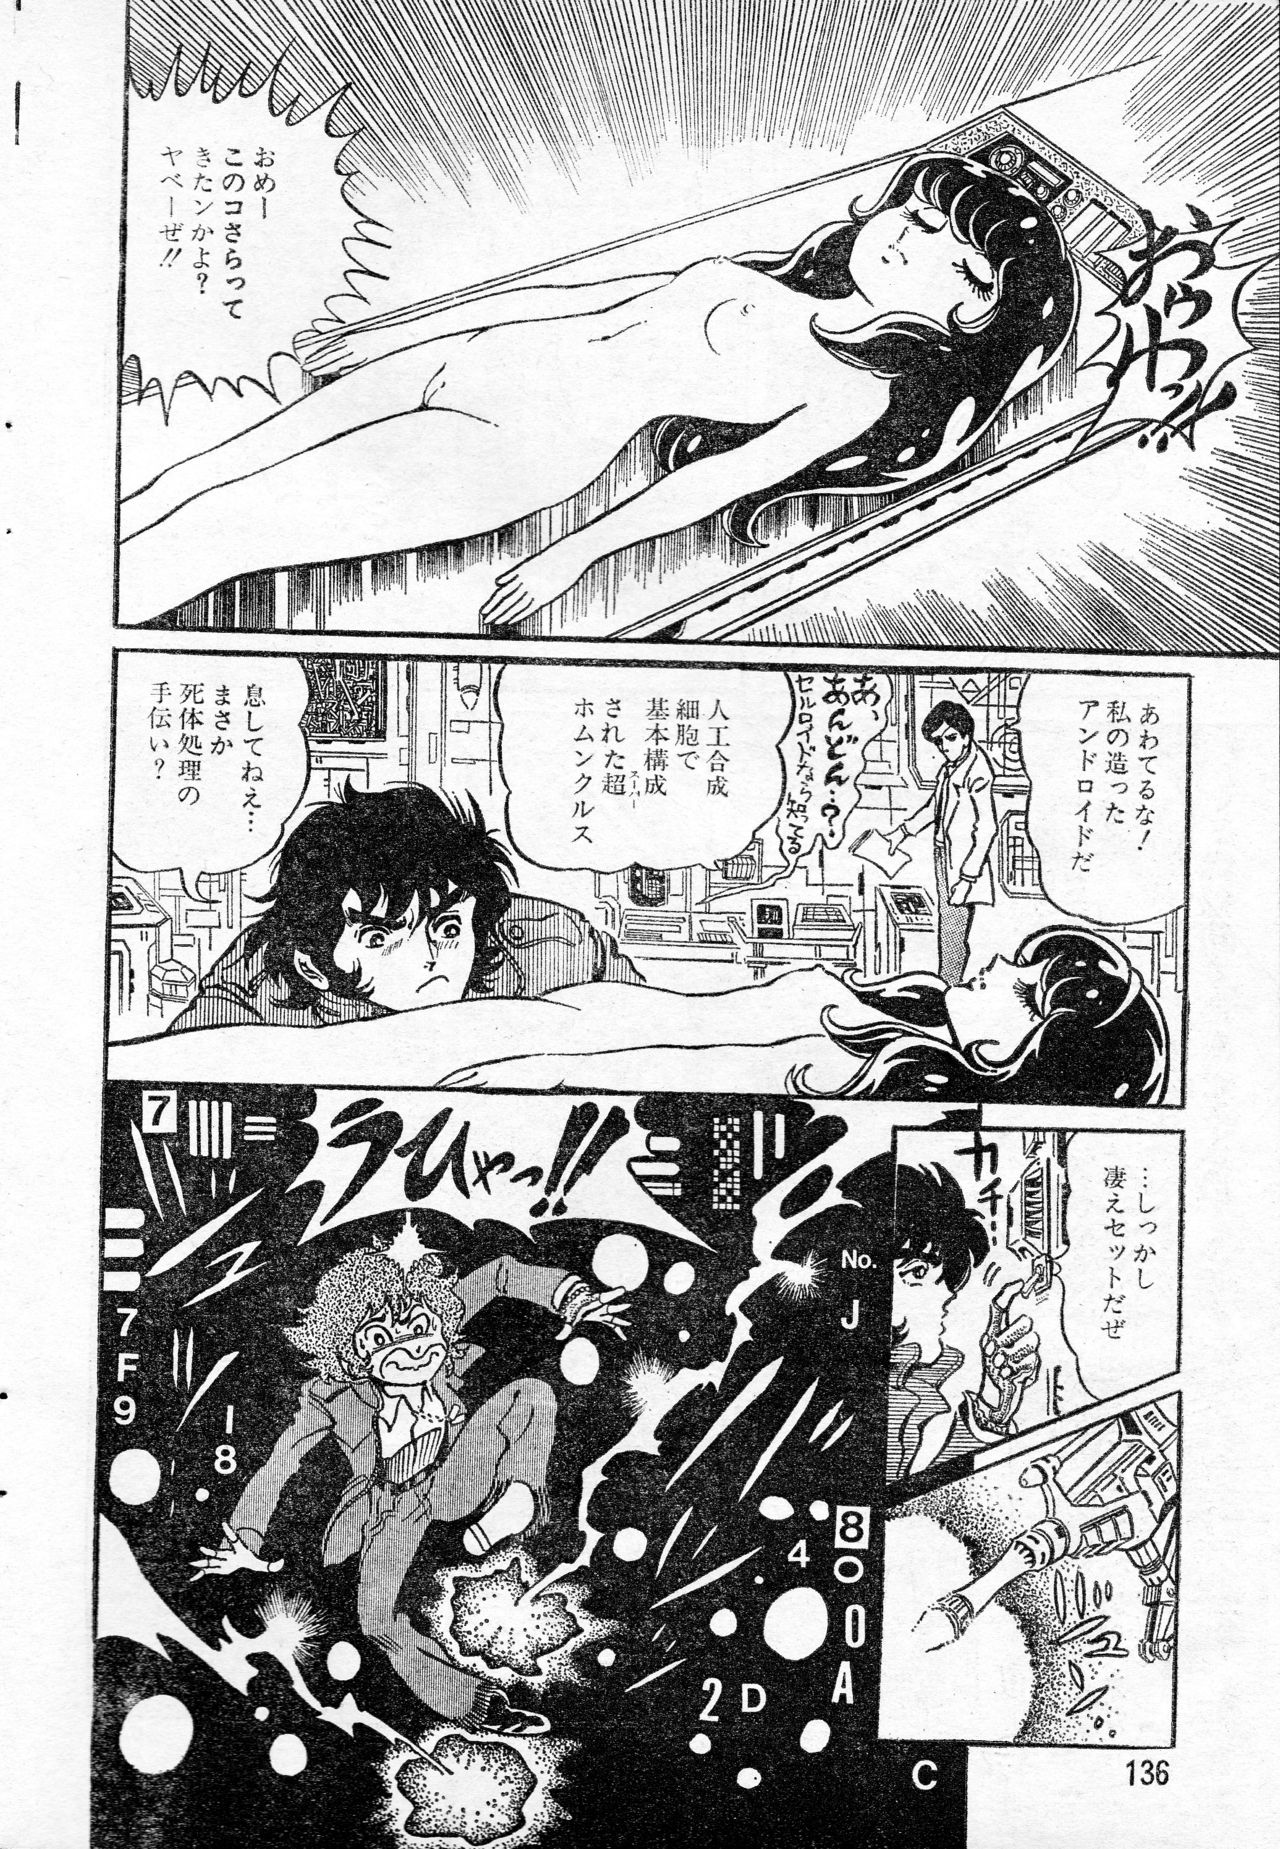 [Hurricane Ryu] Mad City 16 Beat (Lemon People #1, February 1982) [破李拳竜] マッド・シティー16ビート (レモンピープル #1, 1982年2月)